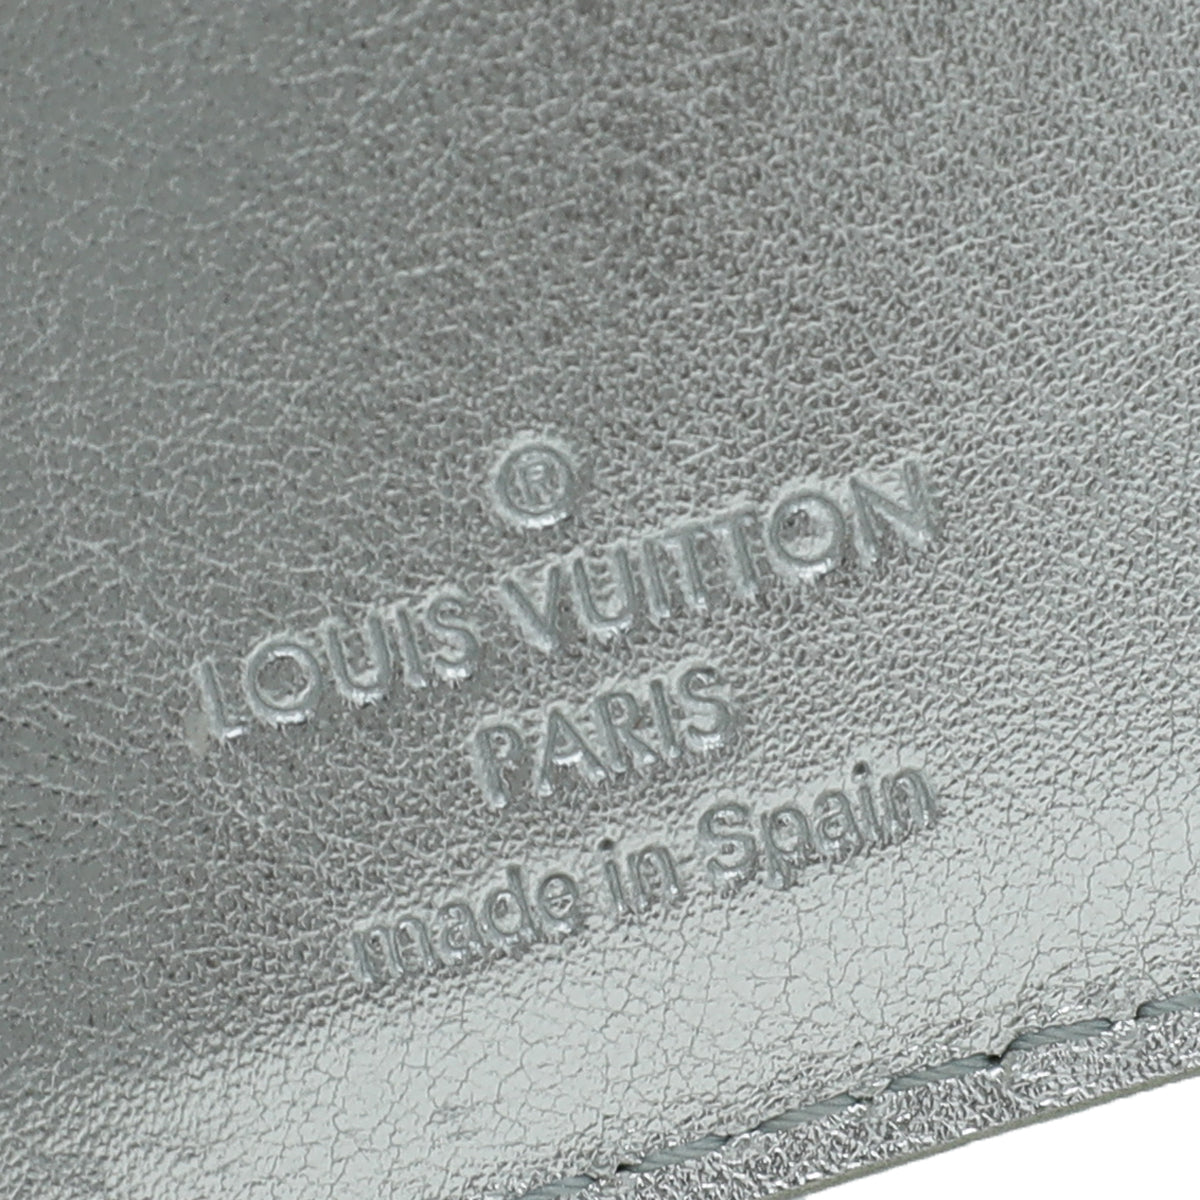 Louis Vuitton Silver Suhali Partenaire Agenda Cover